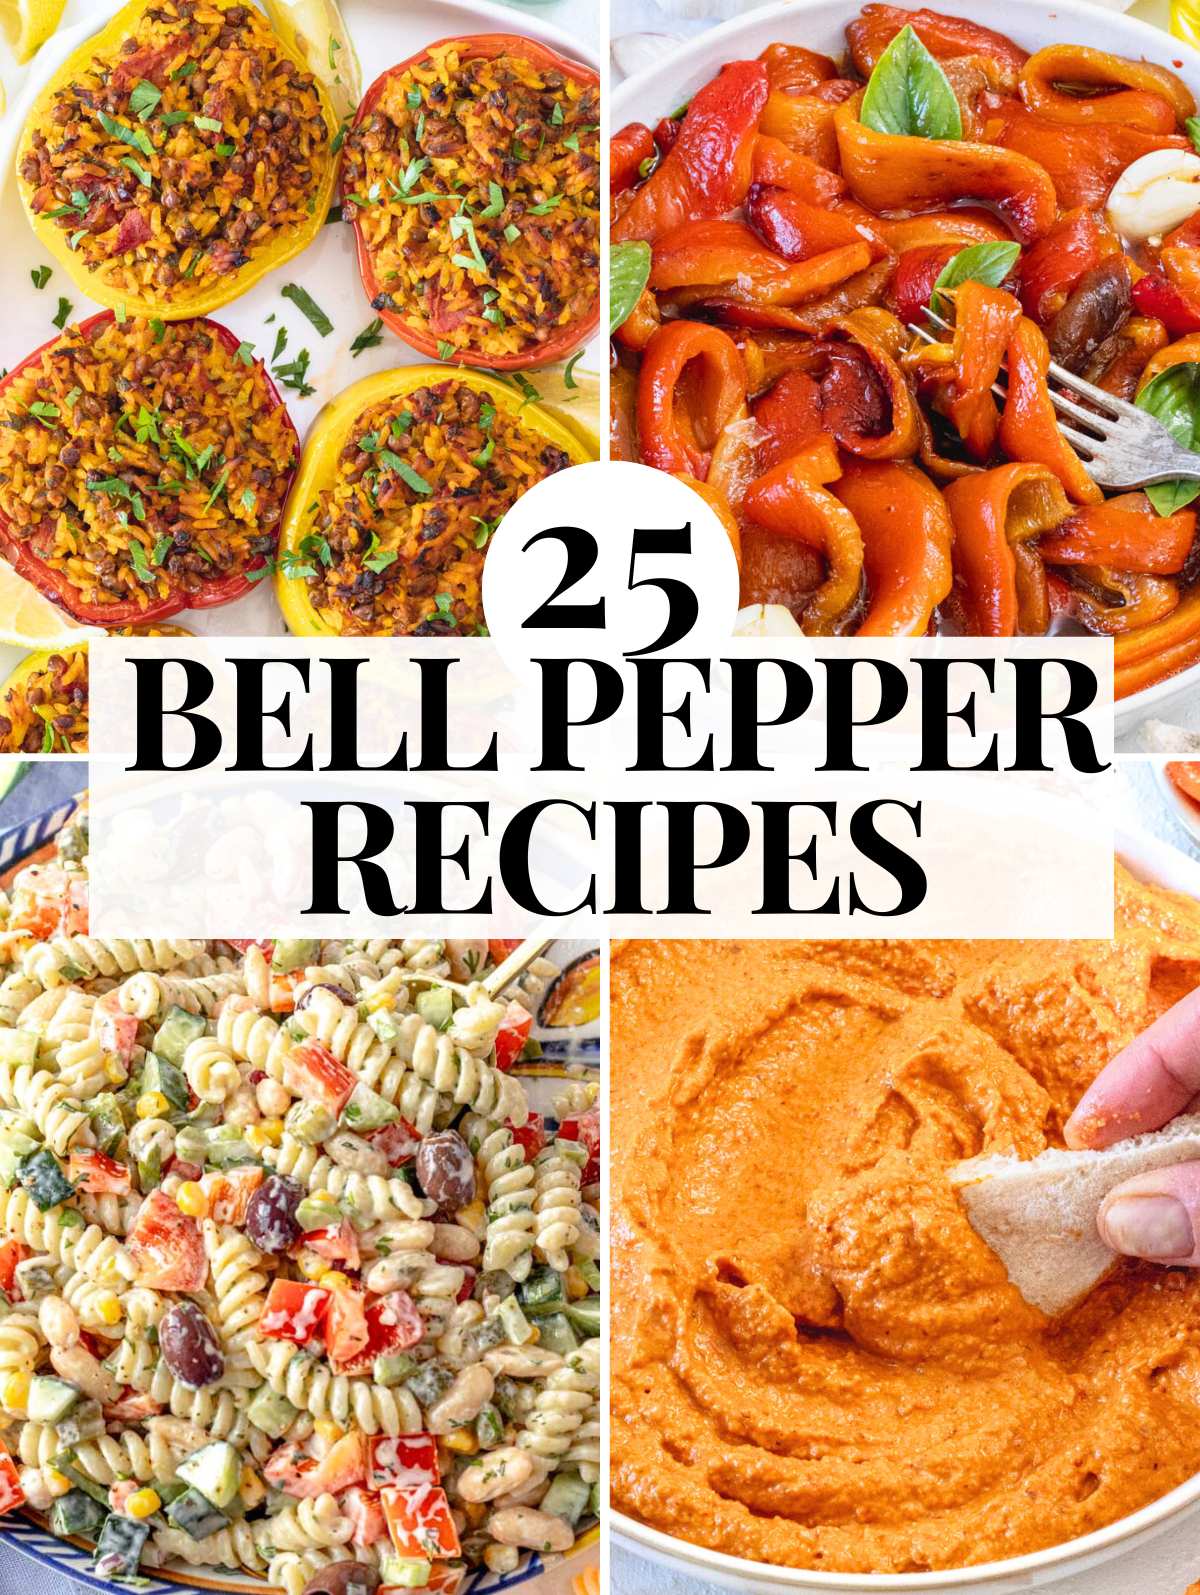 Bell pepper recipes